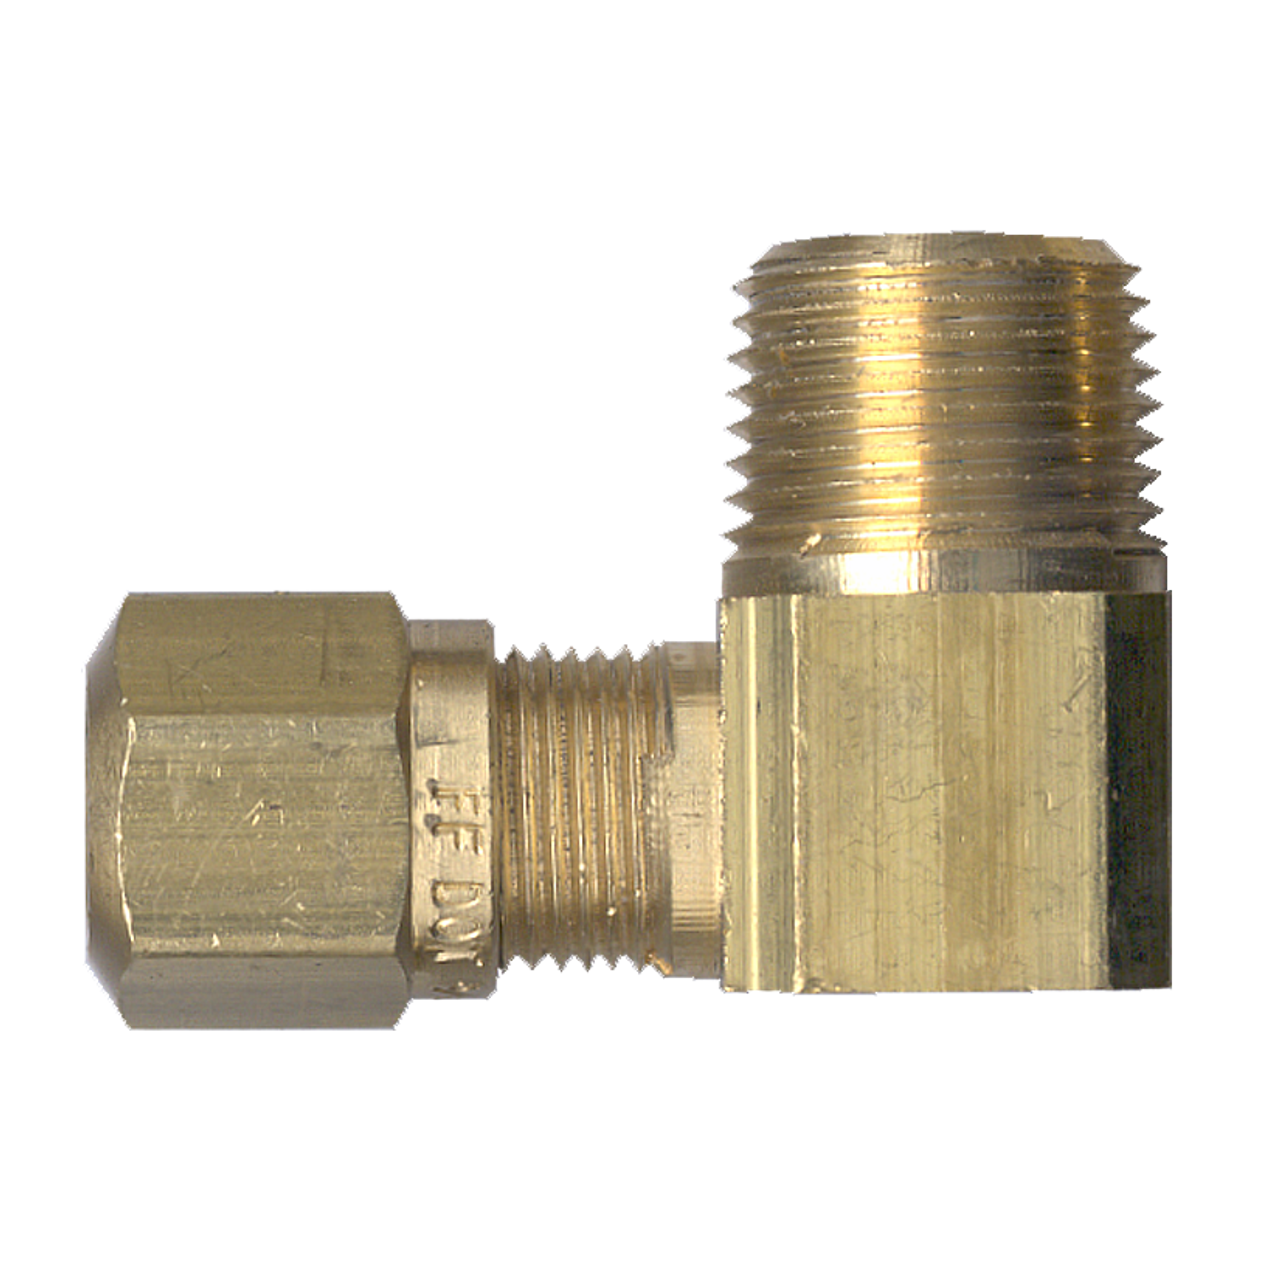 3/8 x 3/8" Brass DOT Poly Line Compression - Male NPT 90° Elbow  1469-6C